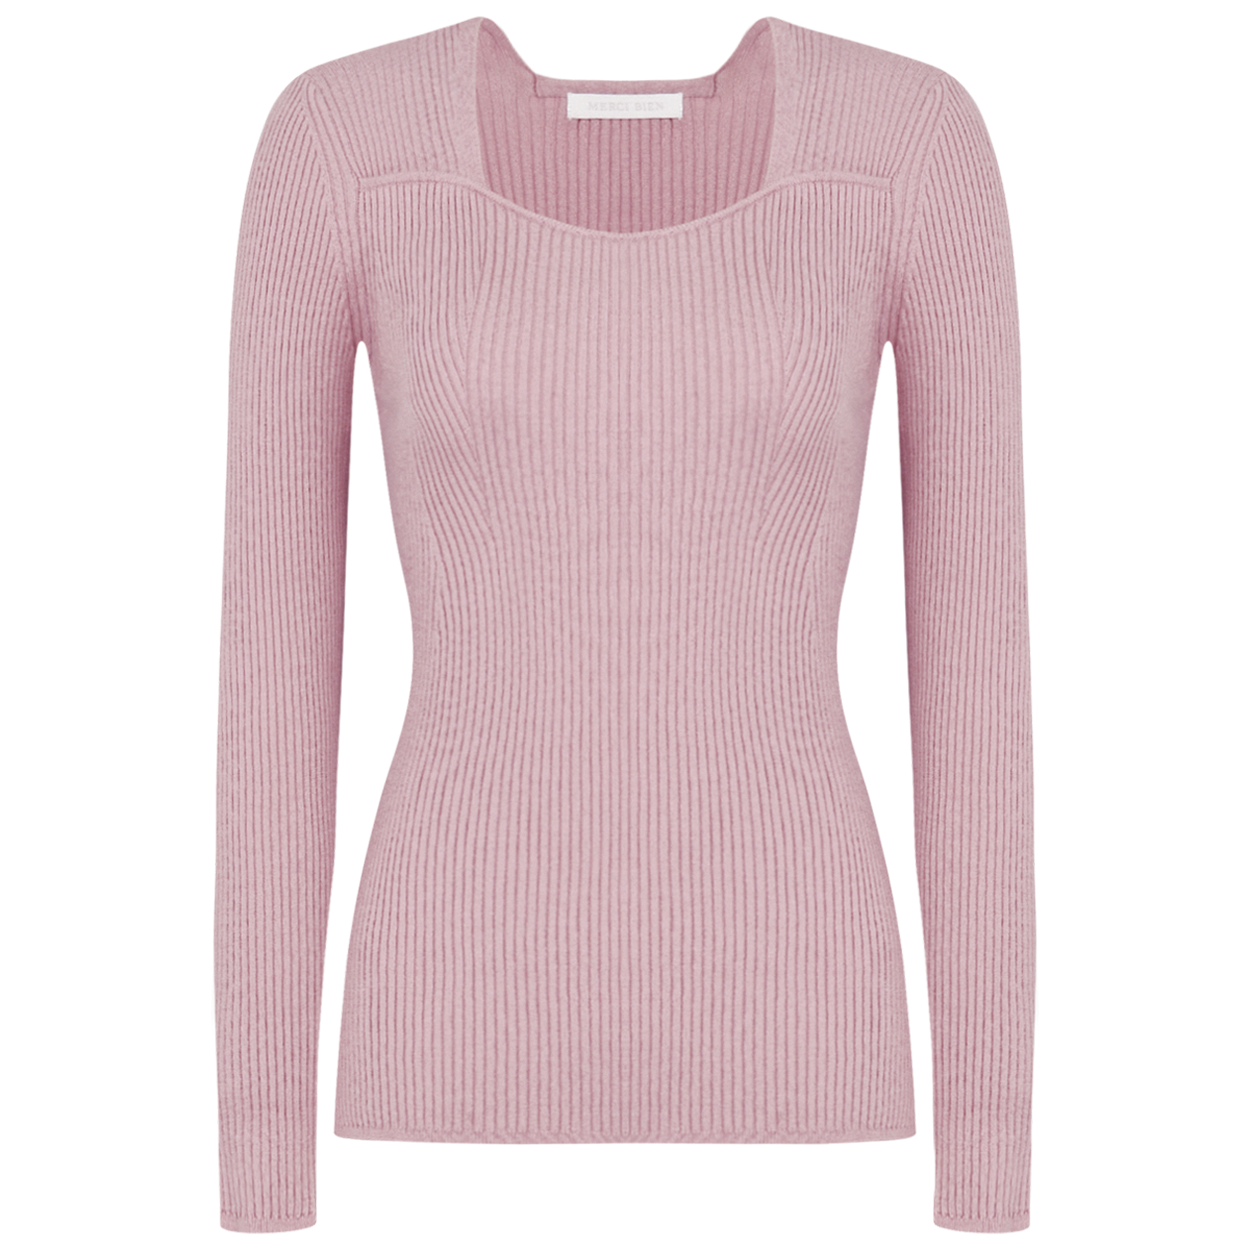 Sophi knit (lilac pink)